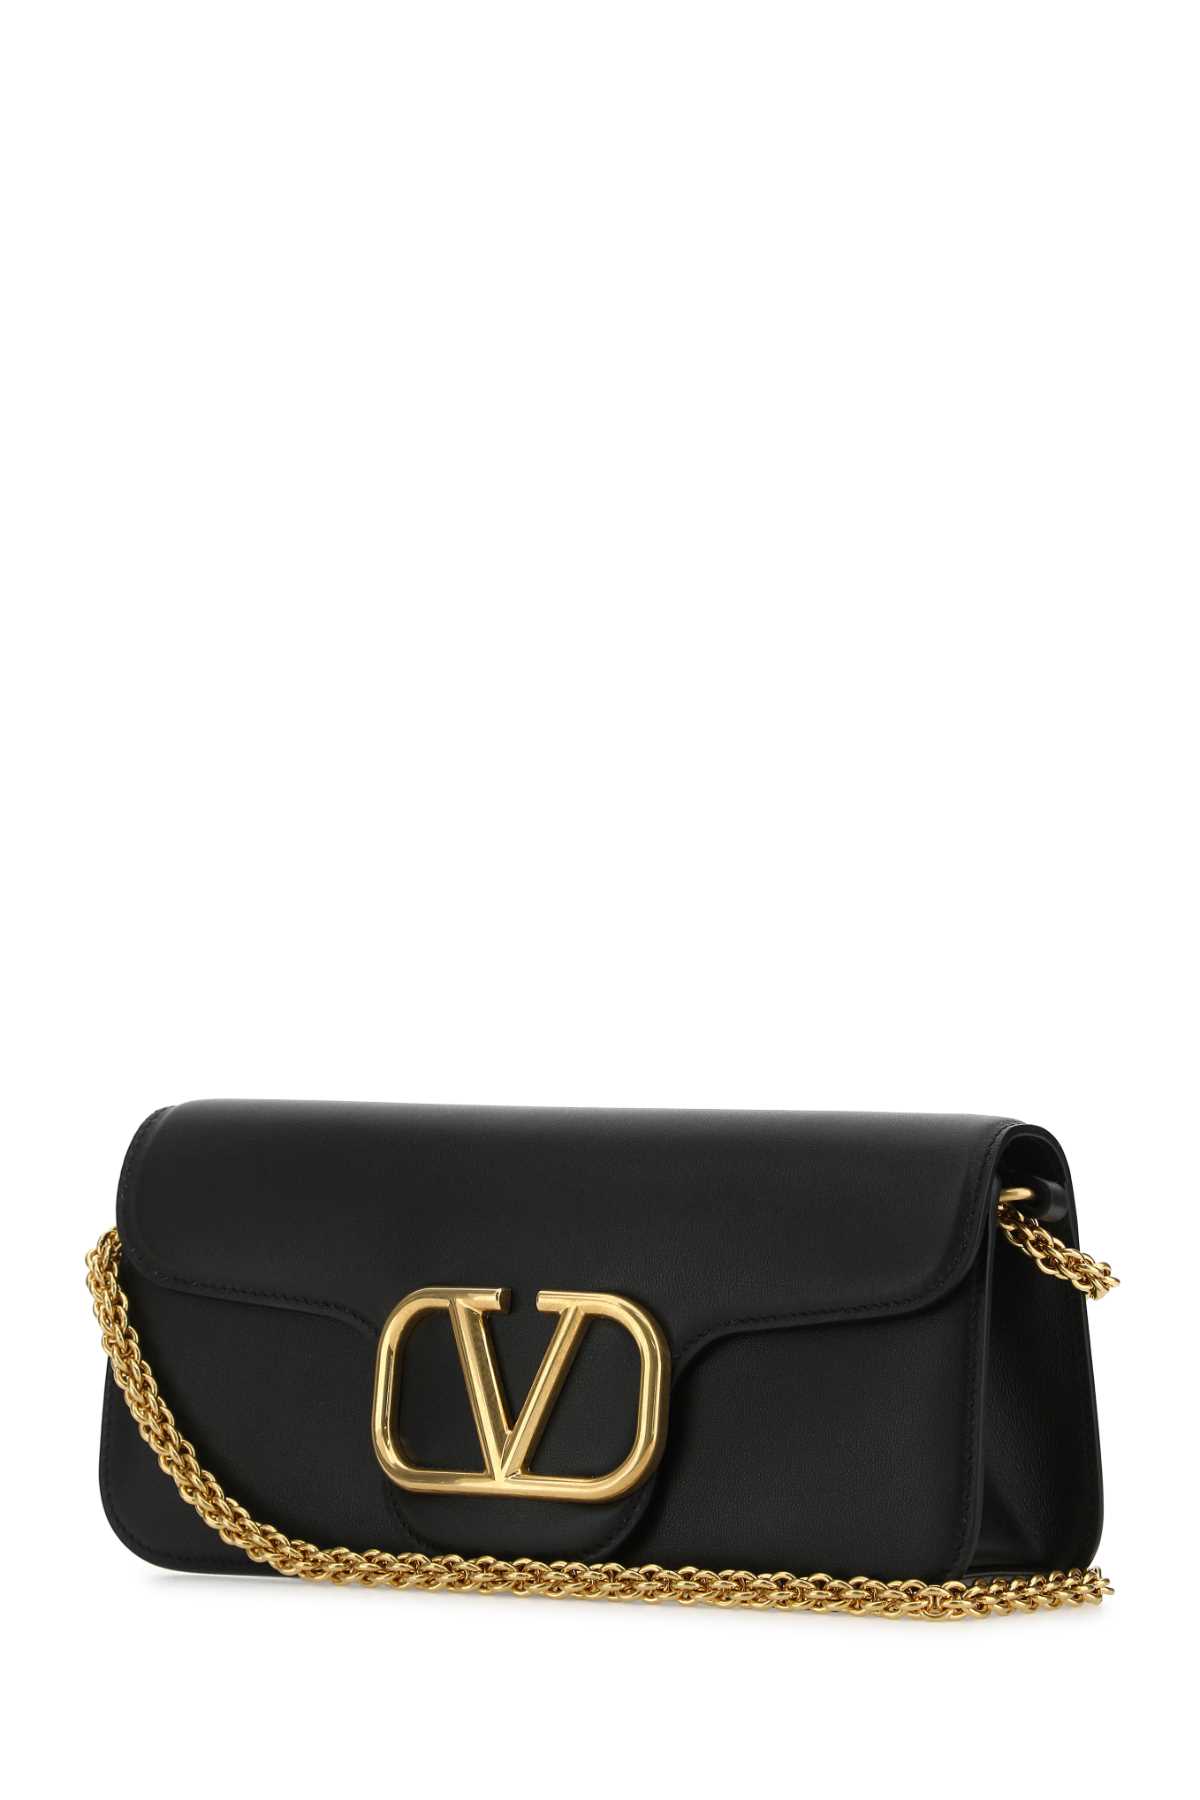 Valentino Garavani Black Leather Locã² Handbag In Nero